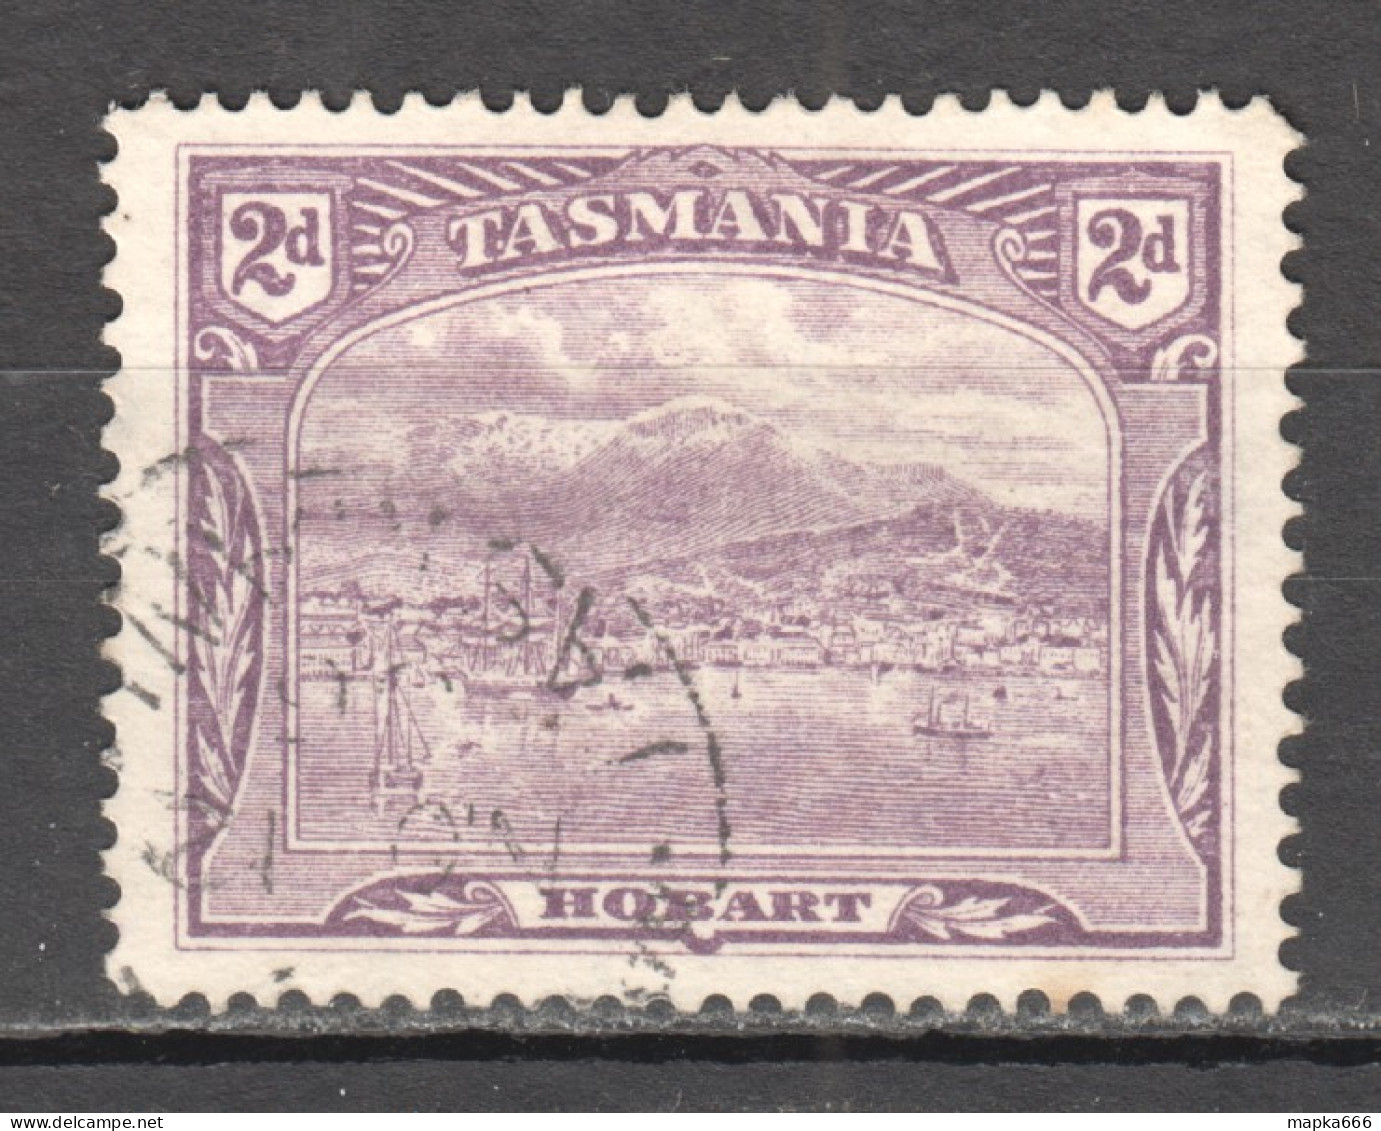 Tas218 1905 Australia Tasmania Gibbons Sg #251 1St Used - Gebraucht